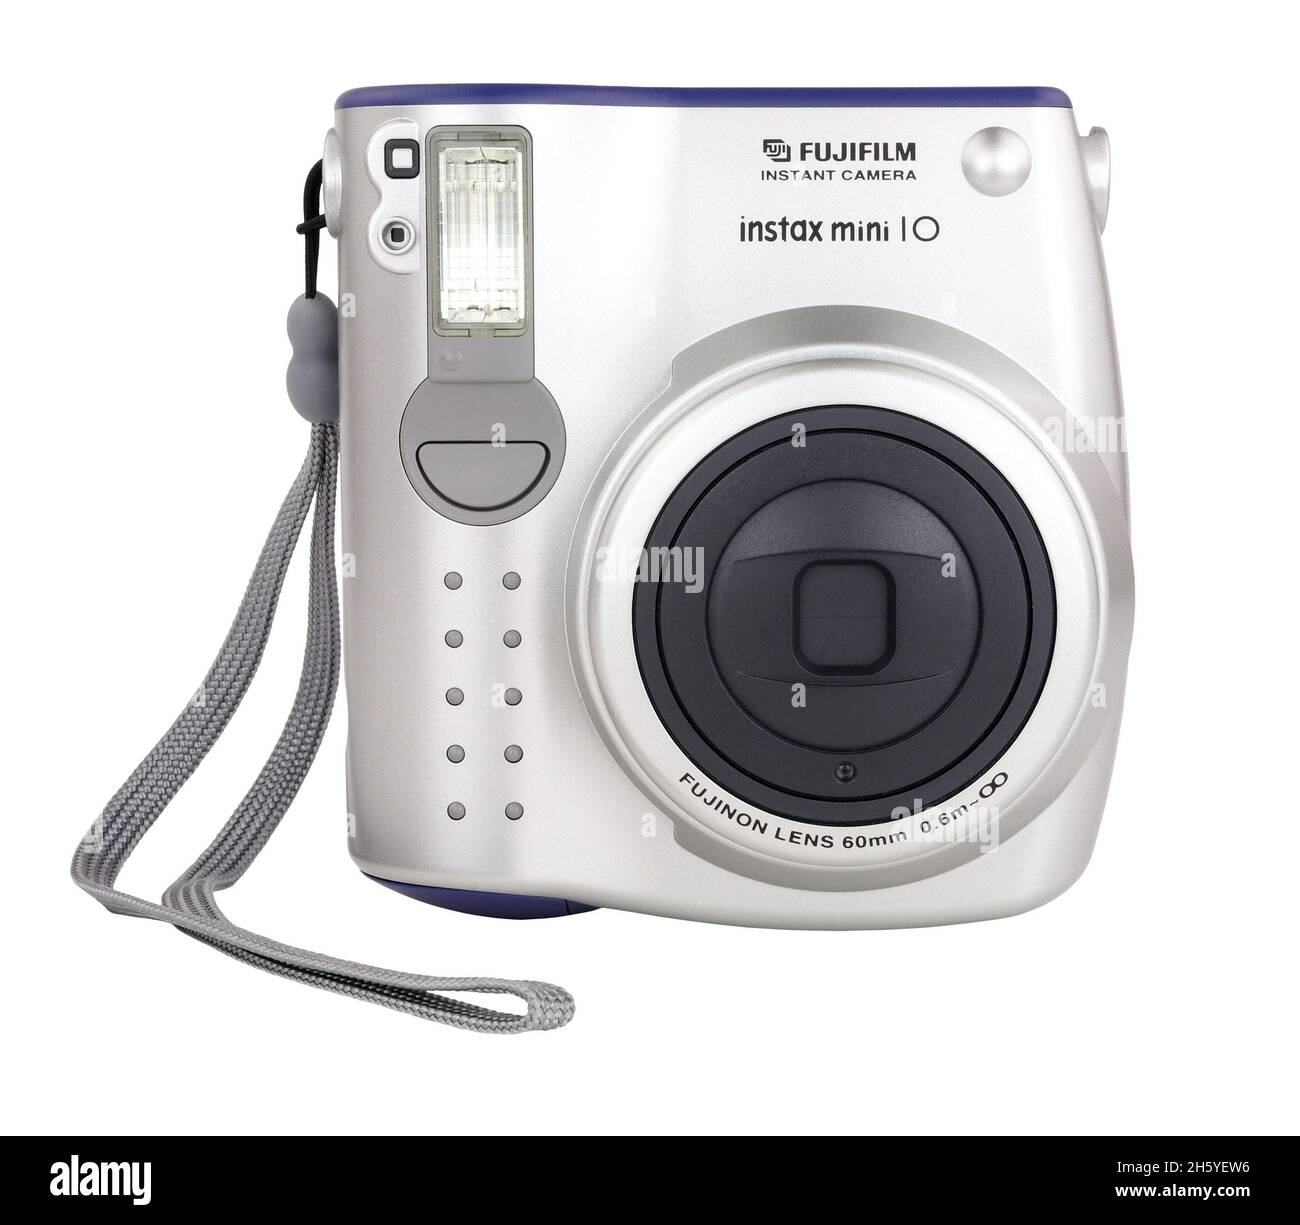 La mini cámara Instax 10 de Fuji Film produjo 5,4cm x 8,6 fotografías  instantáneas Fotografía de stock - Alamy